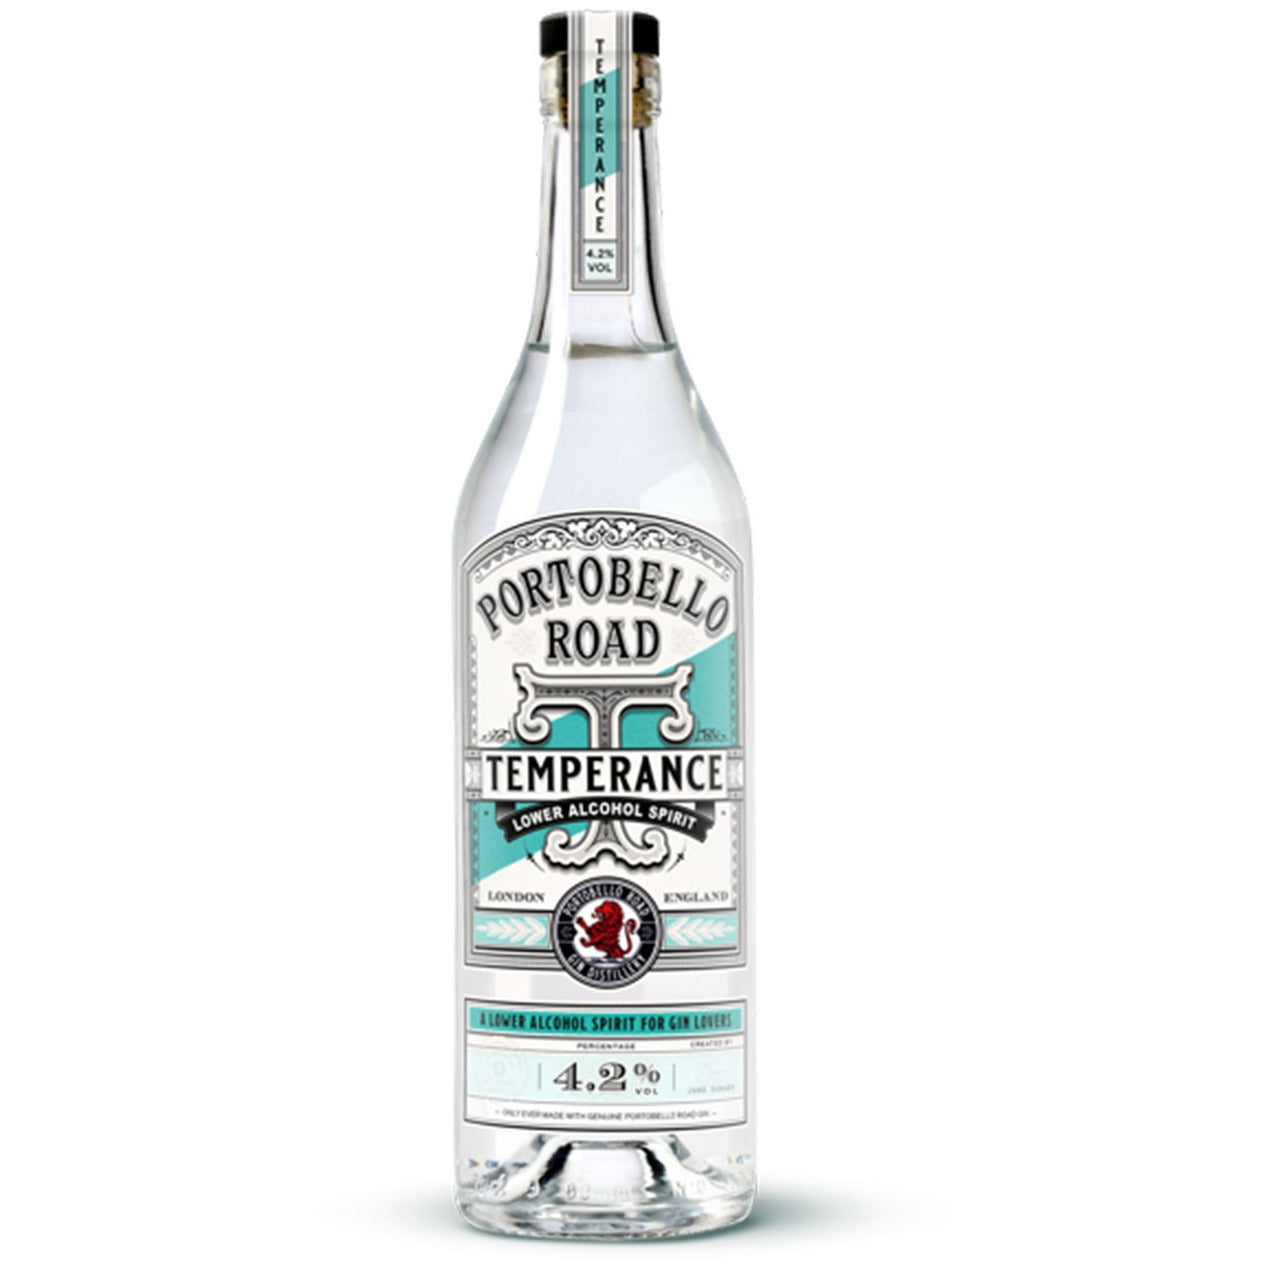 Portobello+Road+TEMPERANCE+Lower+Alcohol+Spirit+4,2%+Vol.+0,7l